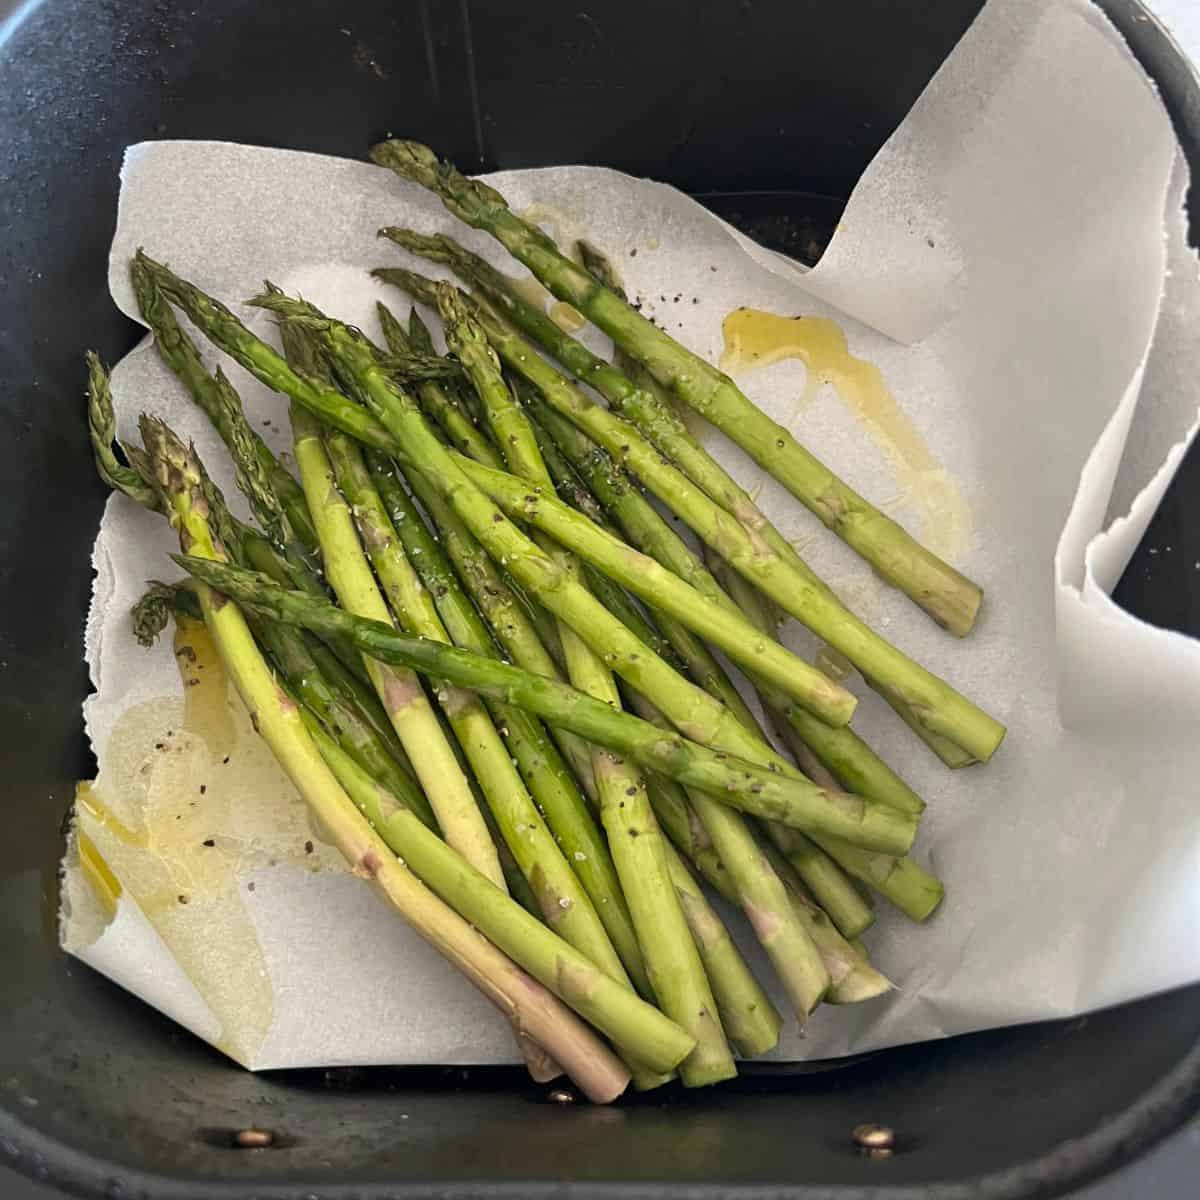 Asparagus in air fryer basket seasoned with salt and pepper. 